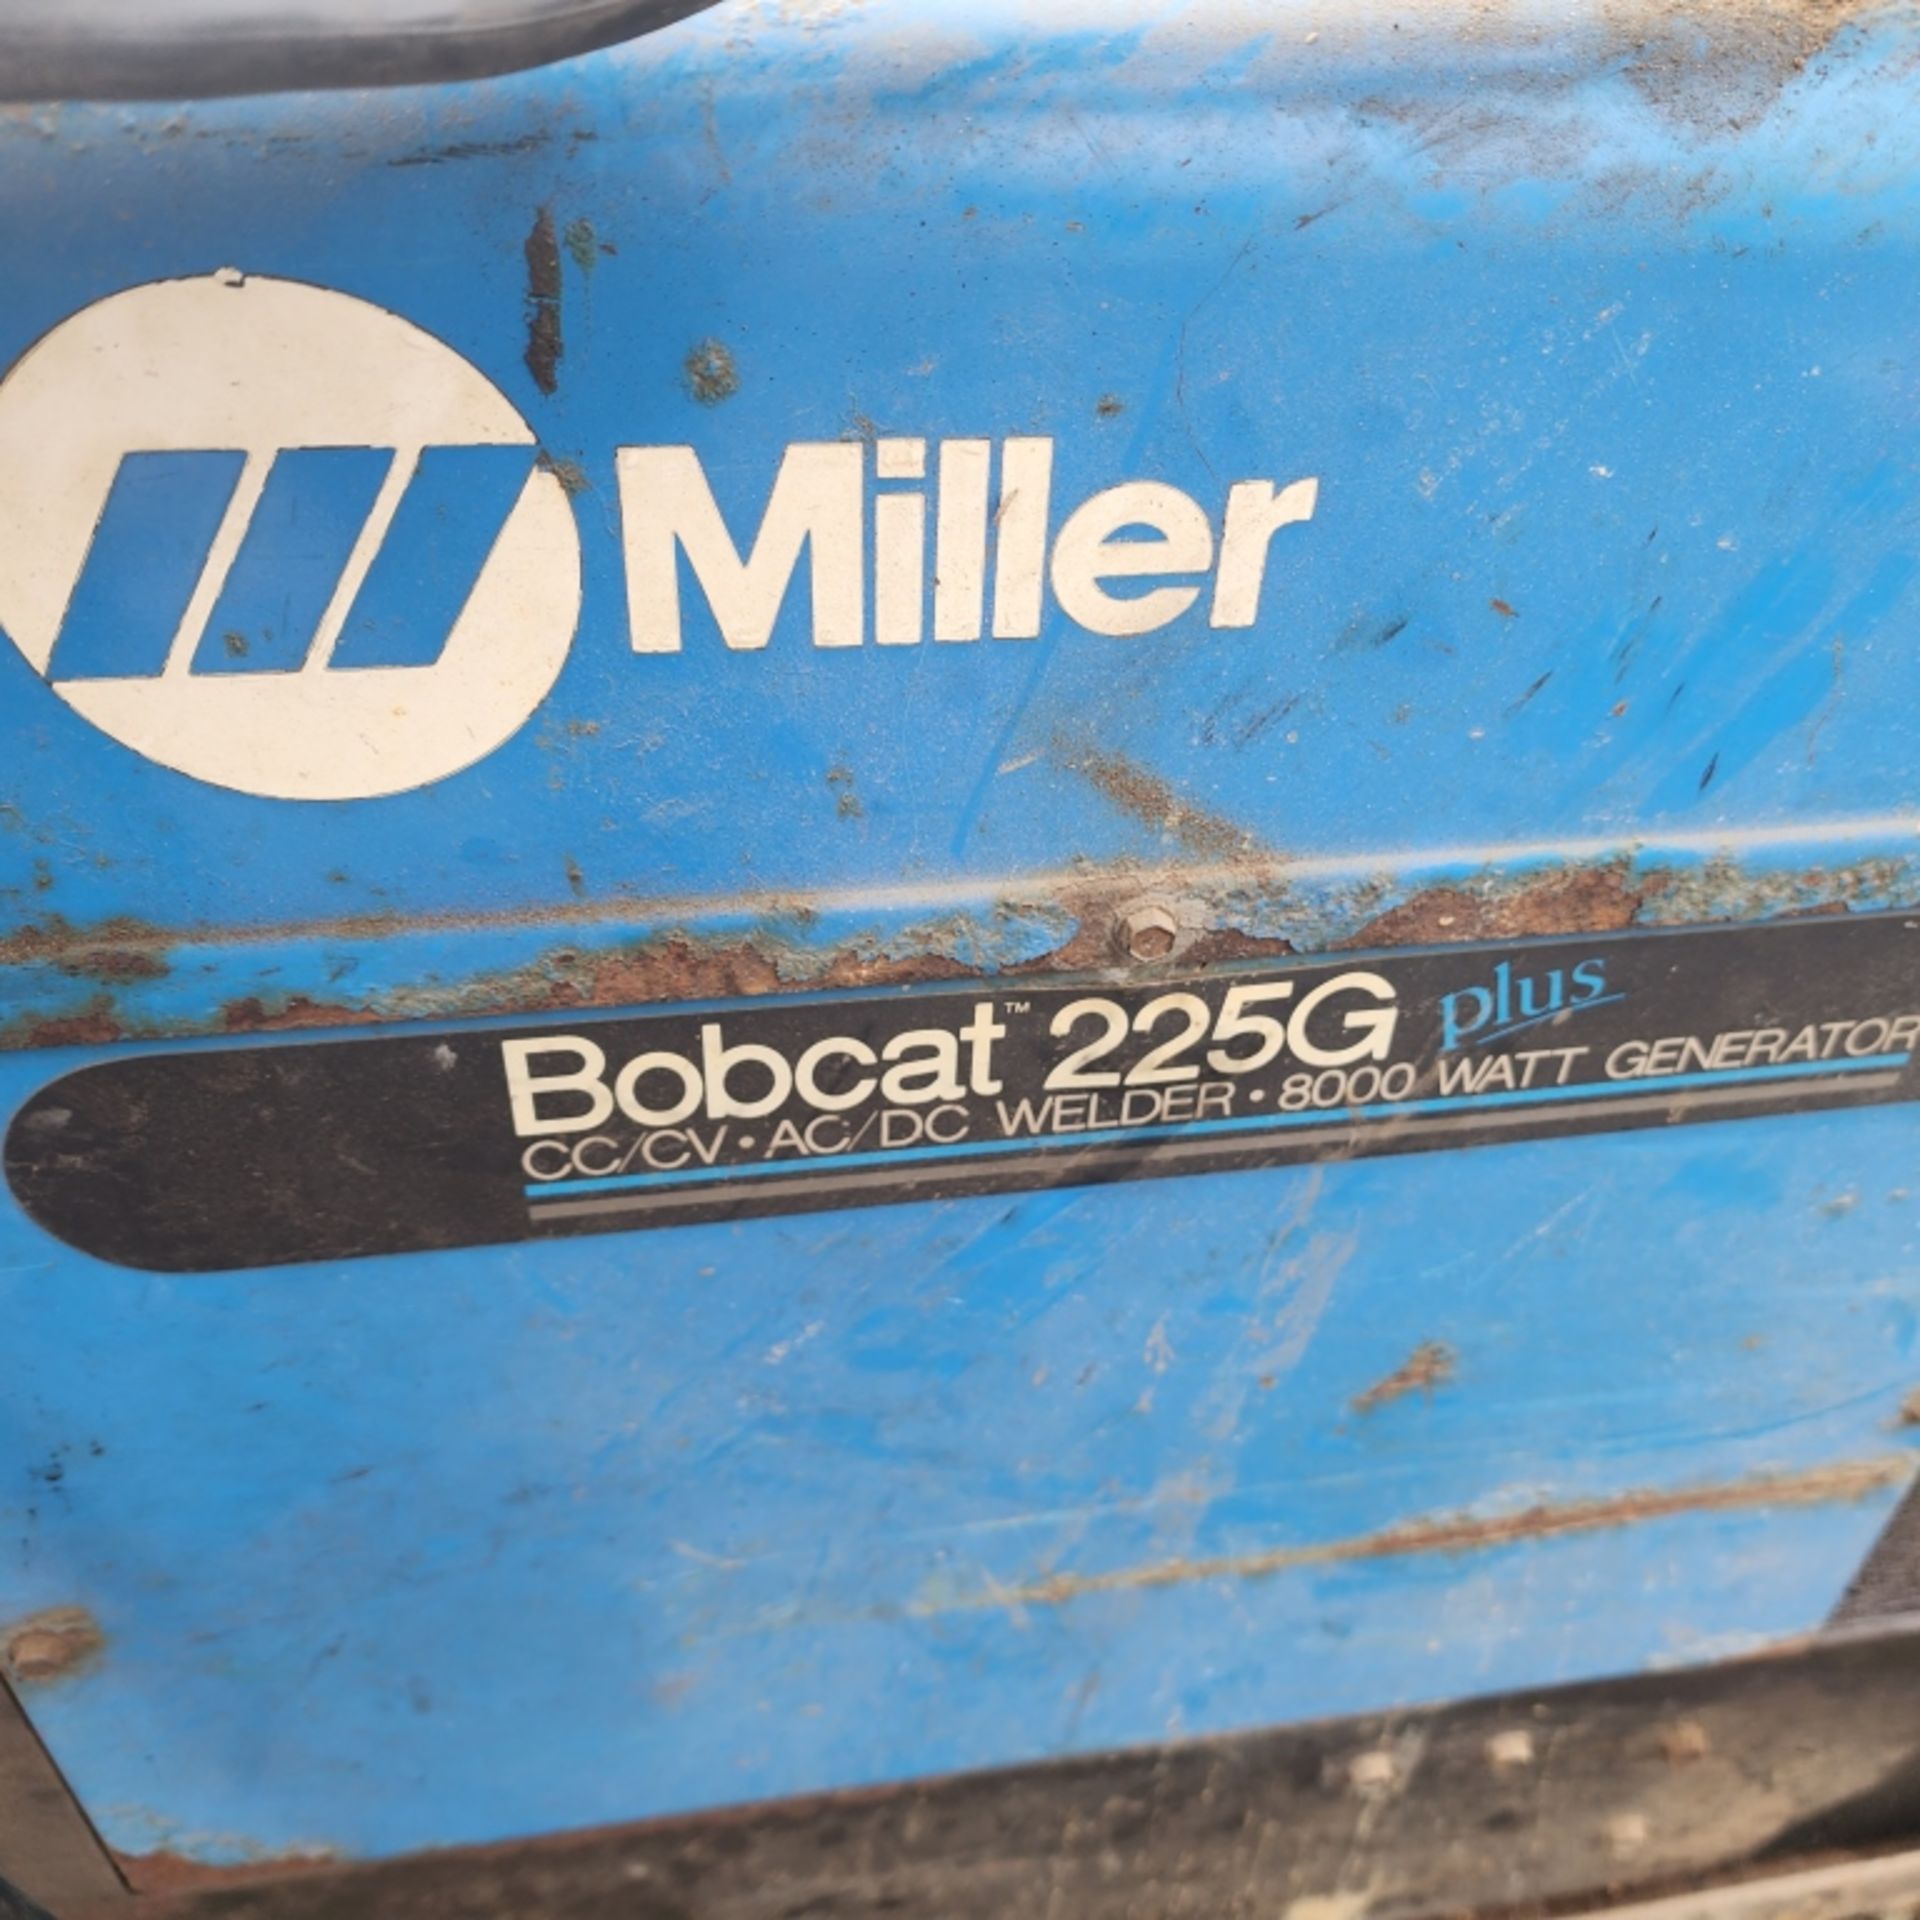 Miller bobcat 225g ac/ DC welder / generator, - Image 3 of 4